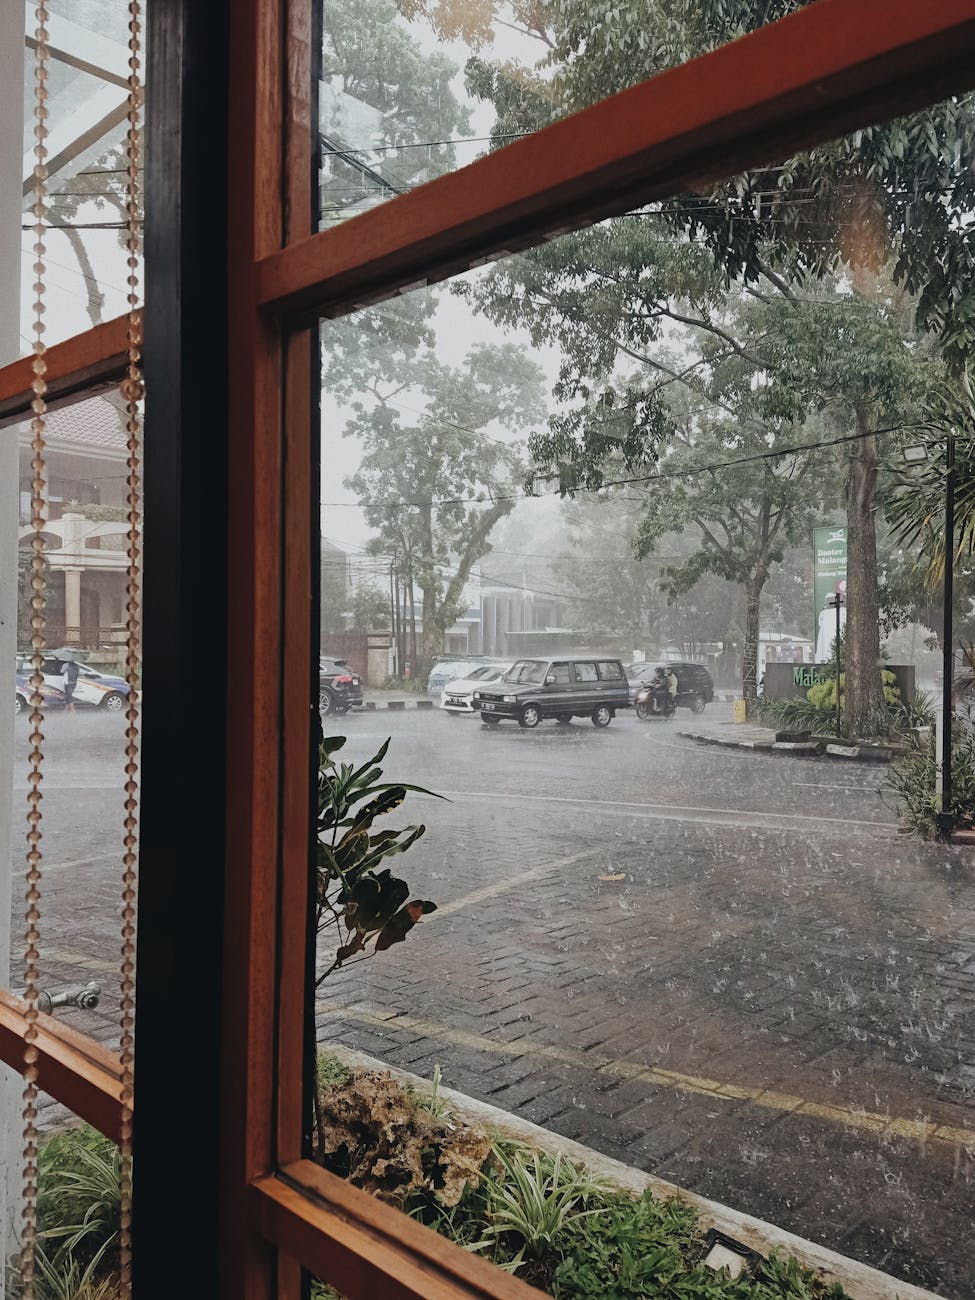 rain seen through window